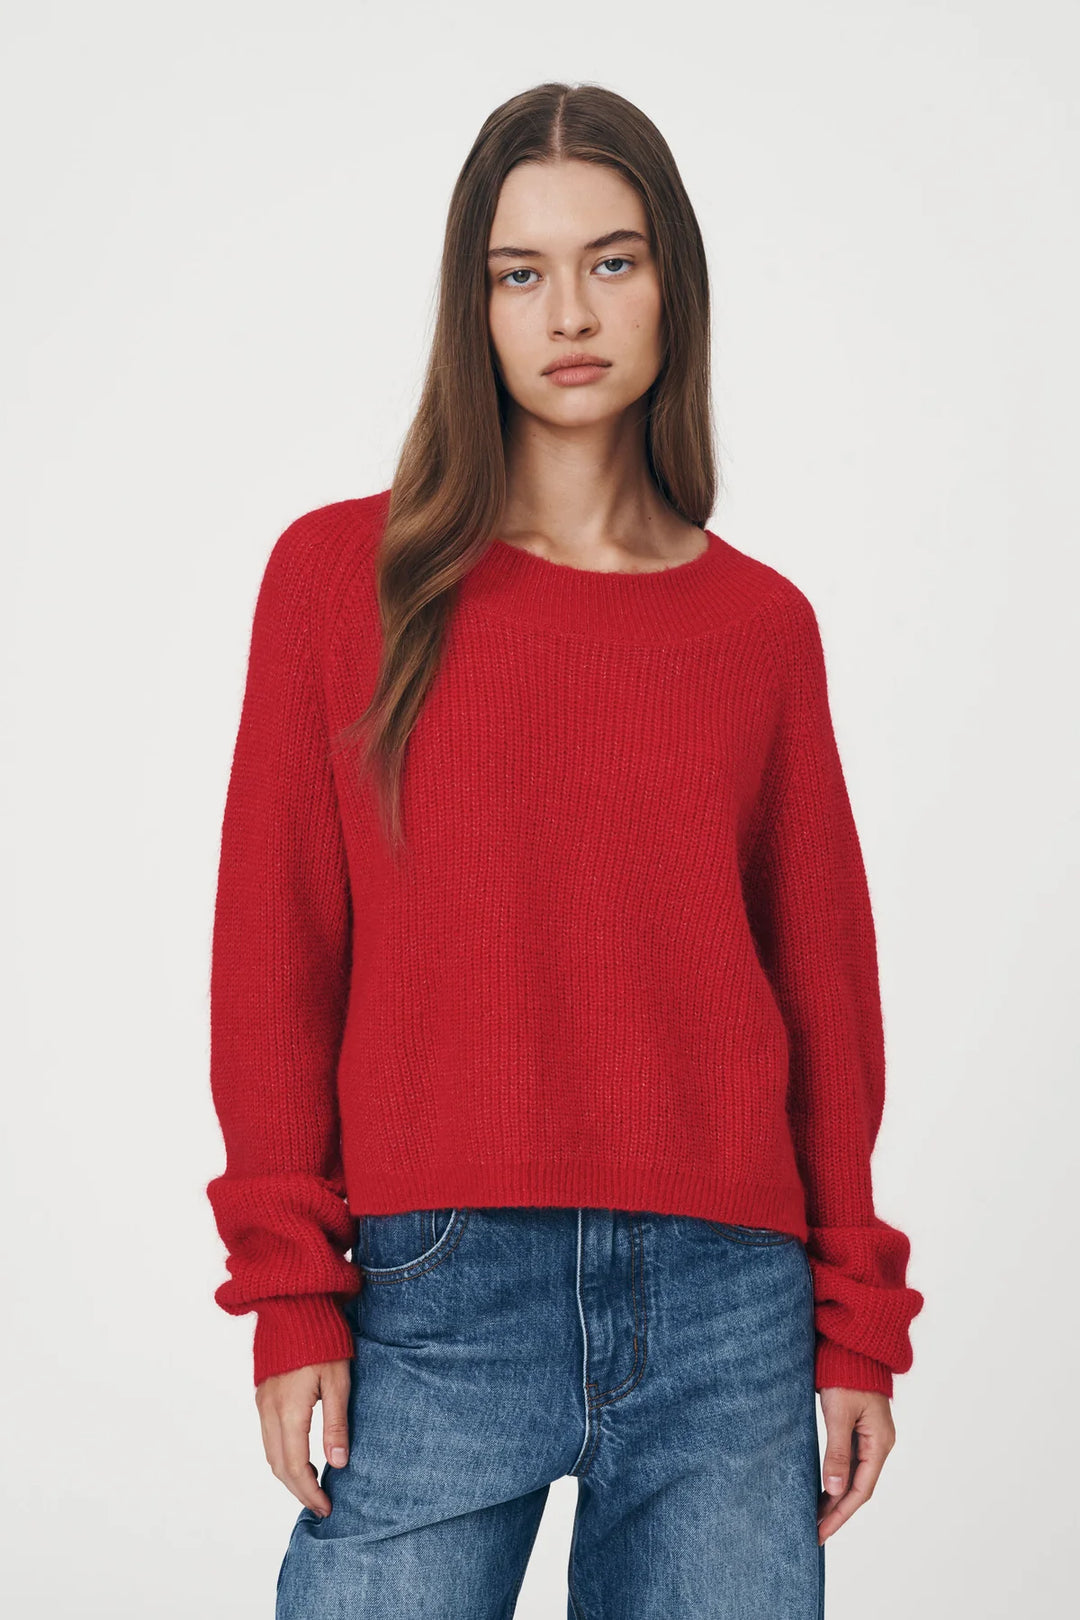 Rowie Ester knit jumper- cherry red